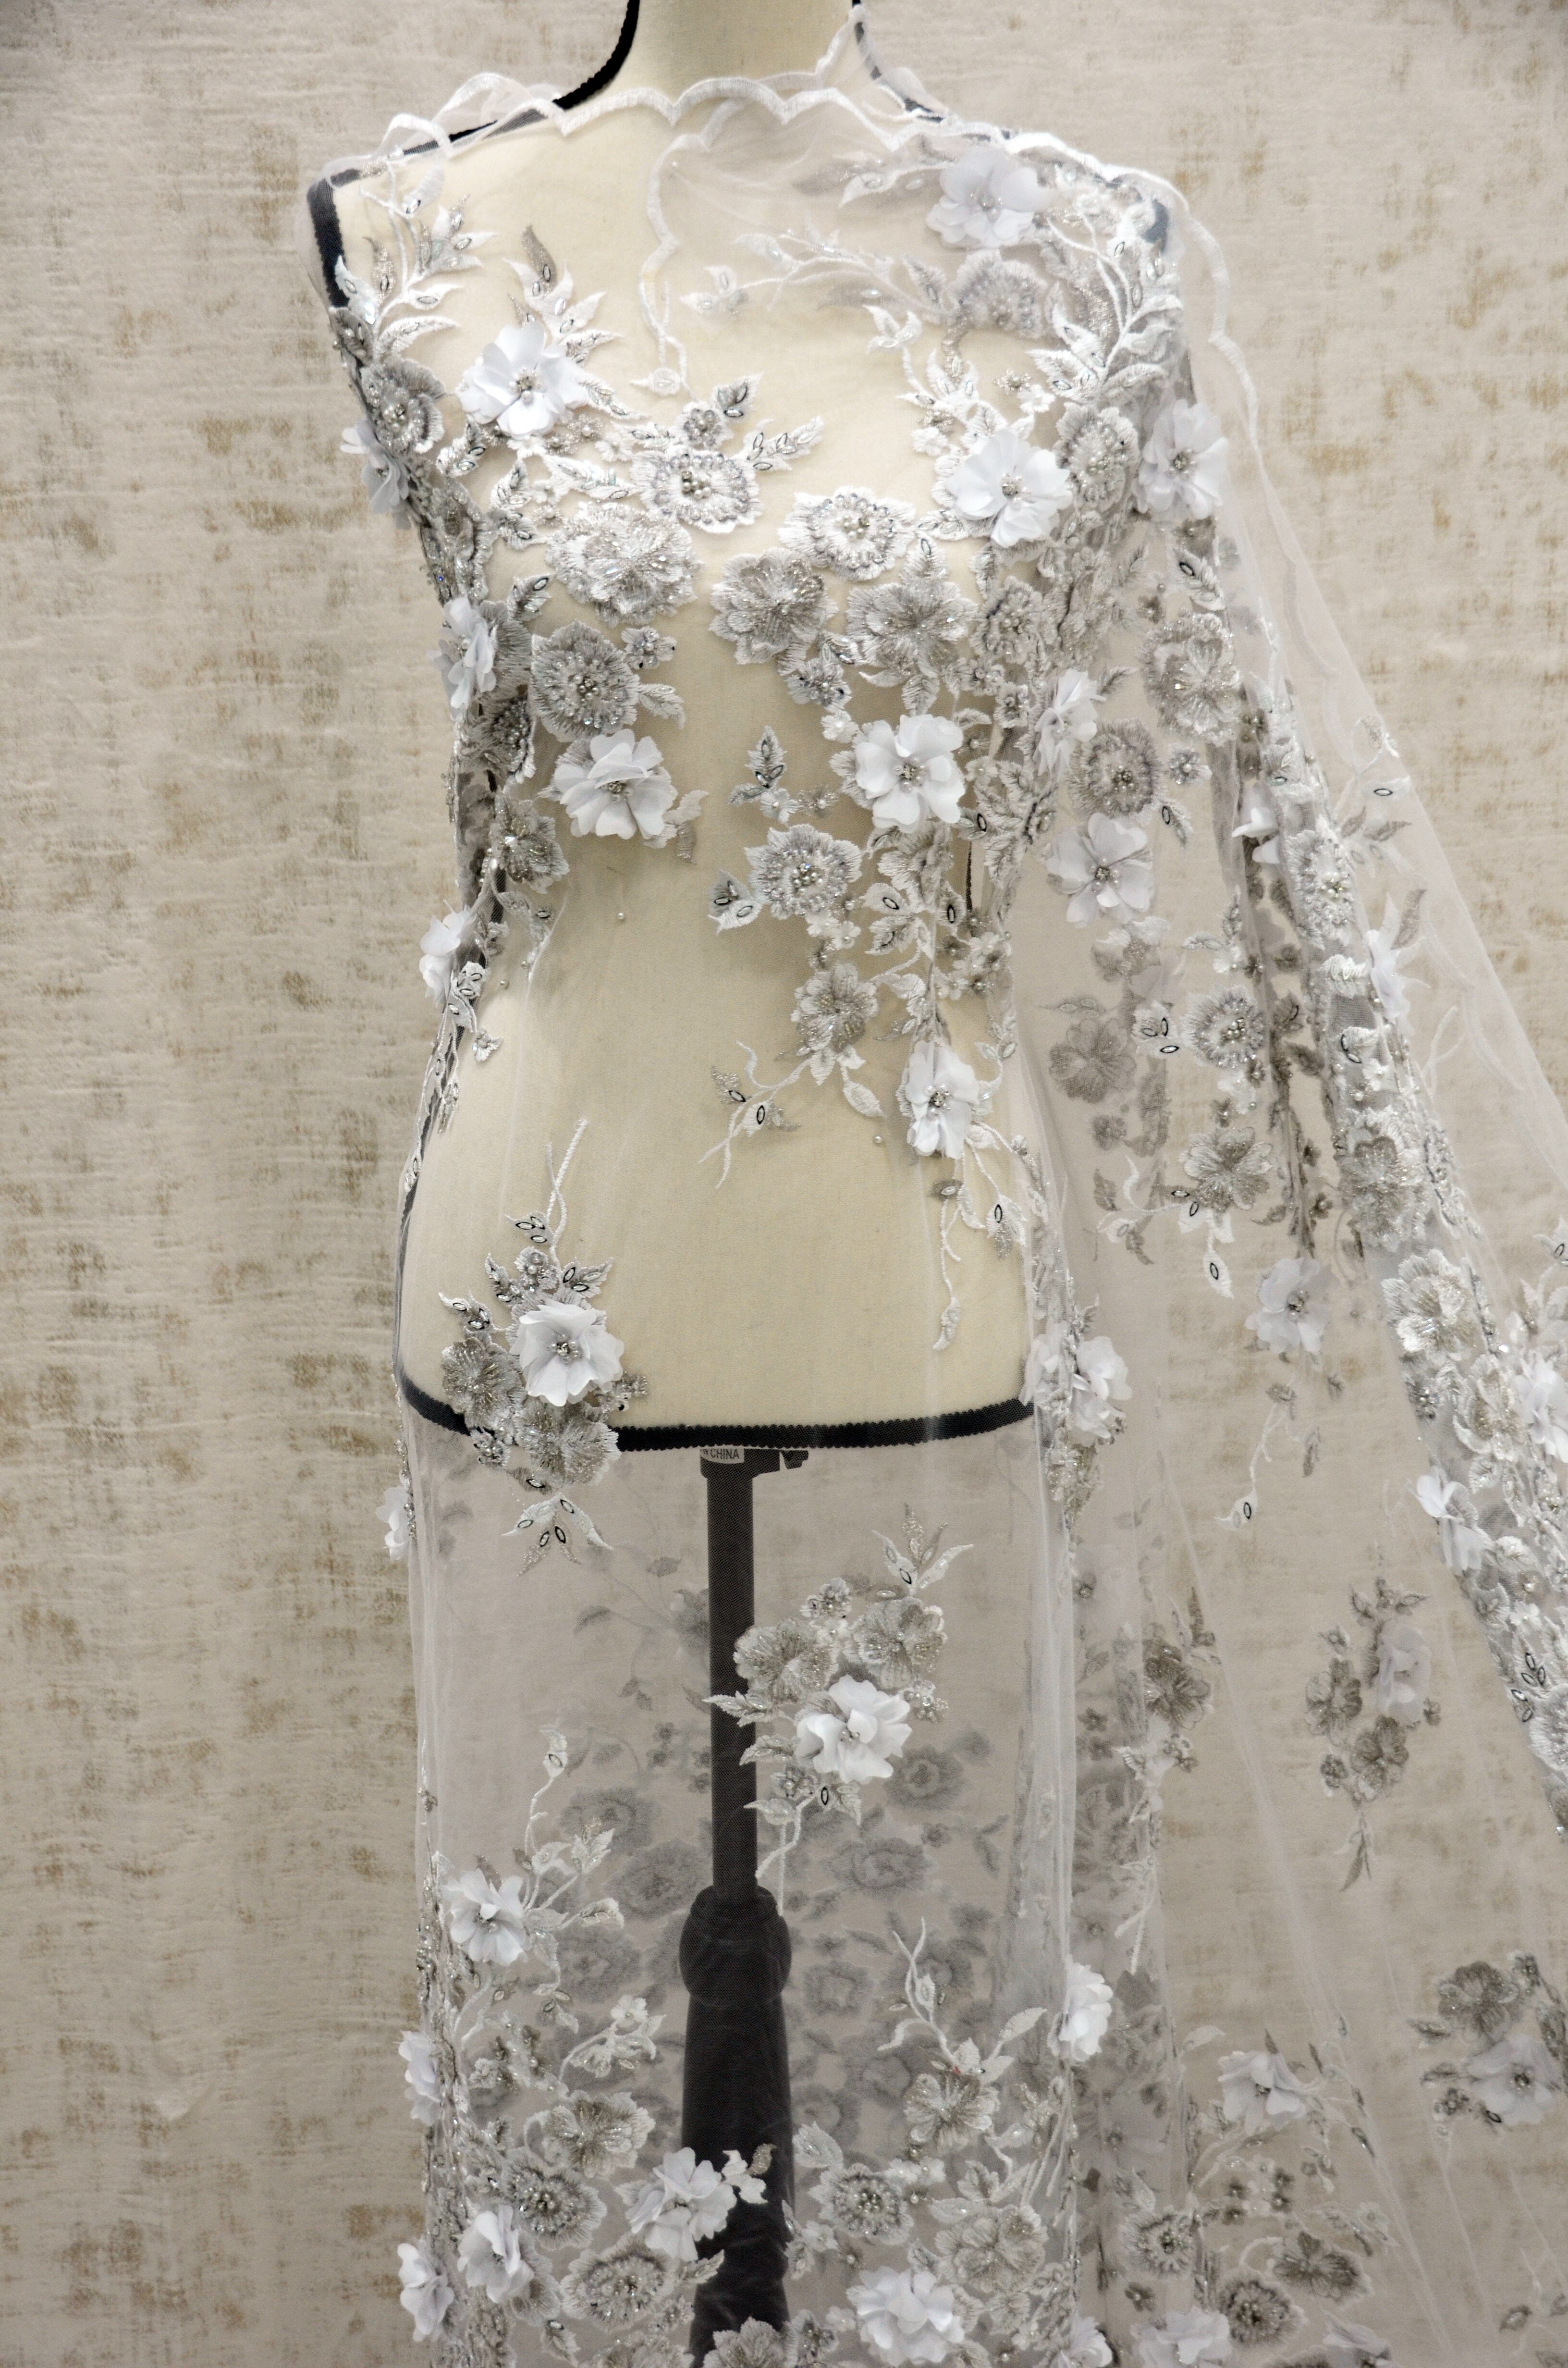 White Bridal Lace Fabric | EA3032 | White Silver Embroidery Lace Fabric | 50" Wide | Wedding Beaded Lace Fabric | Fabric mytextilefabric 